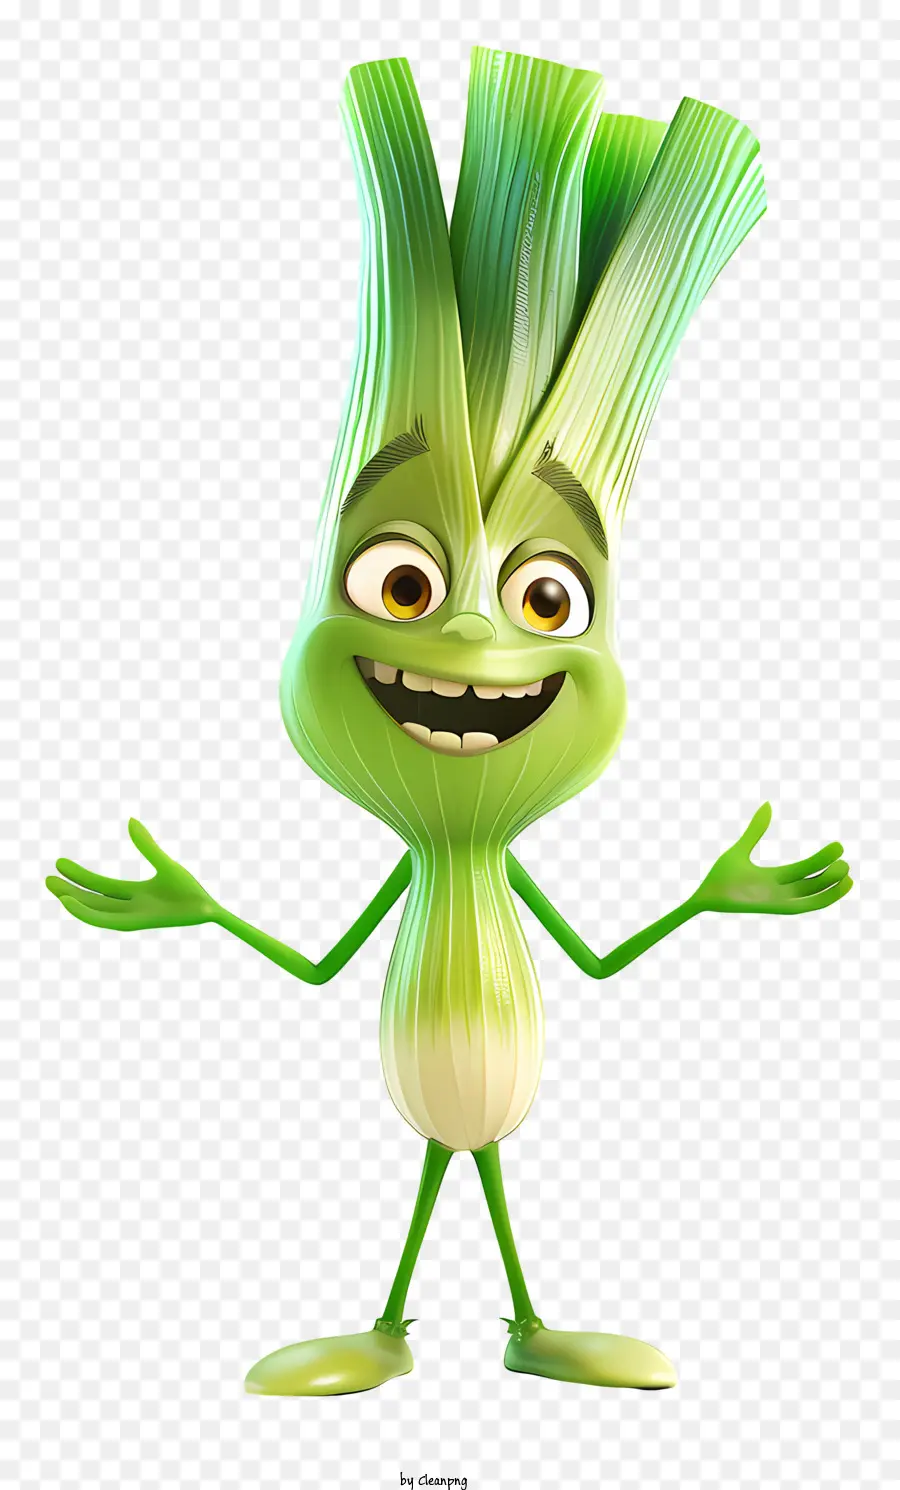 gesunde Ernährung - Happy Broccoli Cartoon -Charakter mit lila Triebe